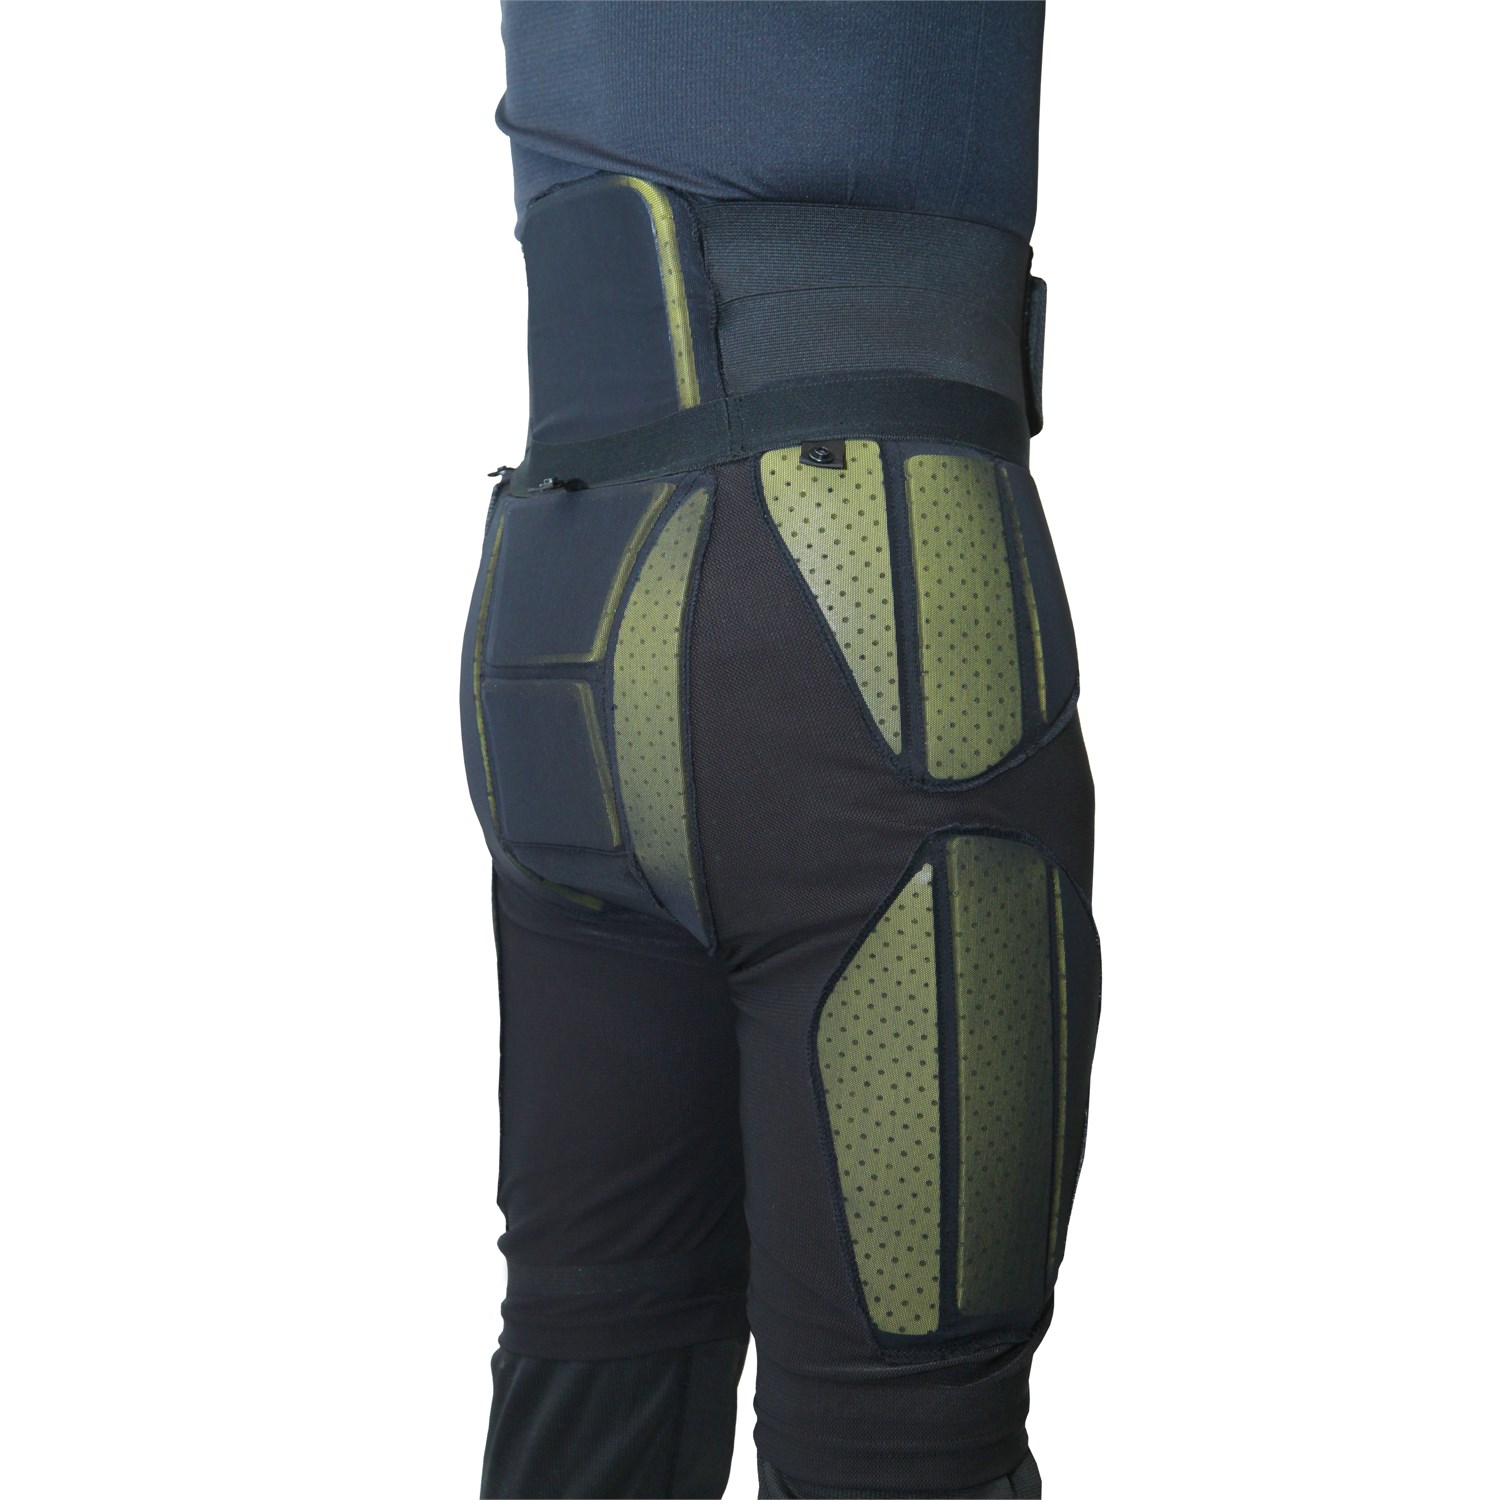 https://images.evo.com/imgp/zoom/72126/339293/bern-low-pro-hip-tailbone-protector-body-armor-.jpg